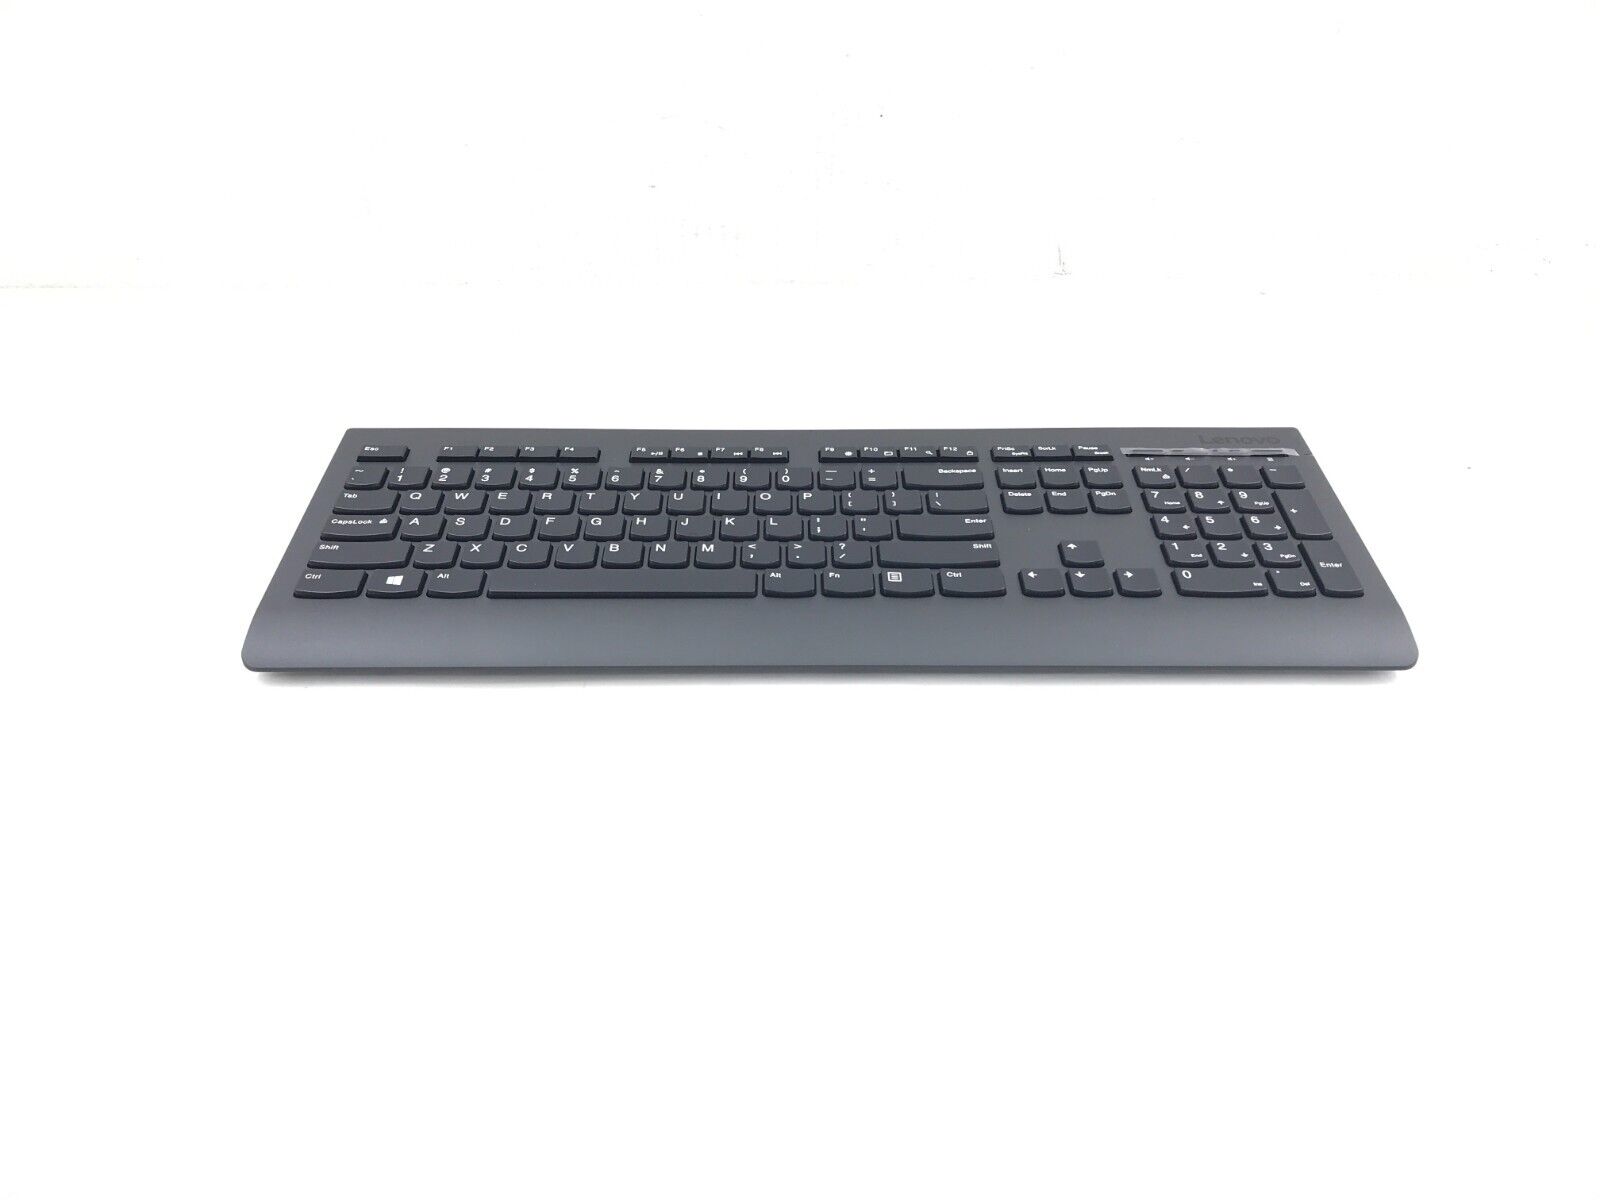 Lenovo Professional Wireless Keyboard US English 4X30H56796 (KEYBOARD ONLY)